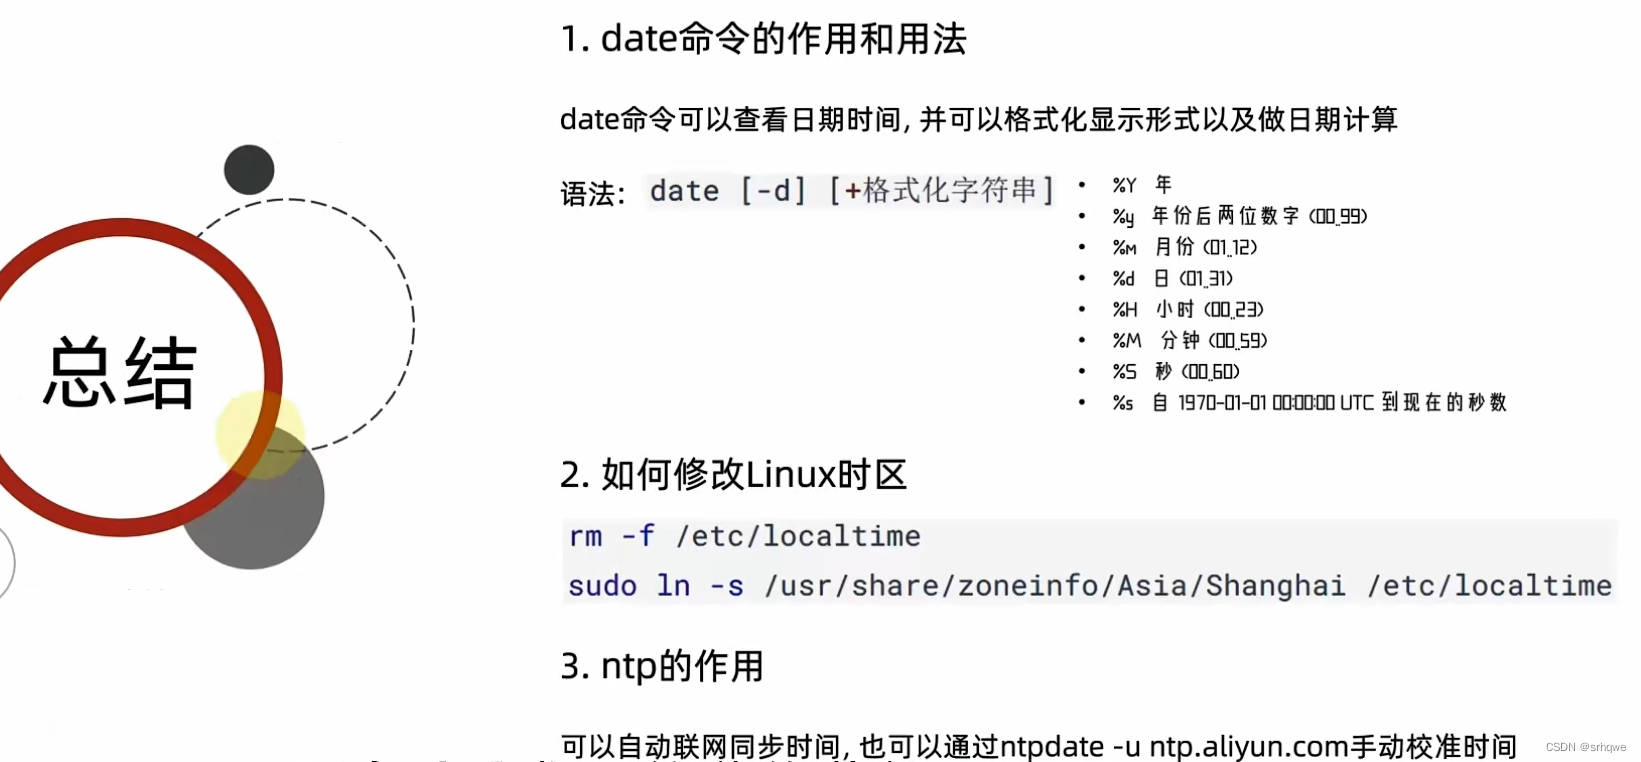 Linux：命令date、ntp查看和修改（校准）时间和地区。